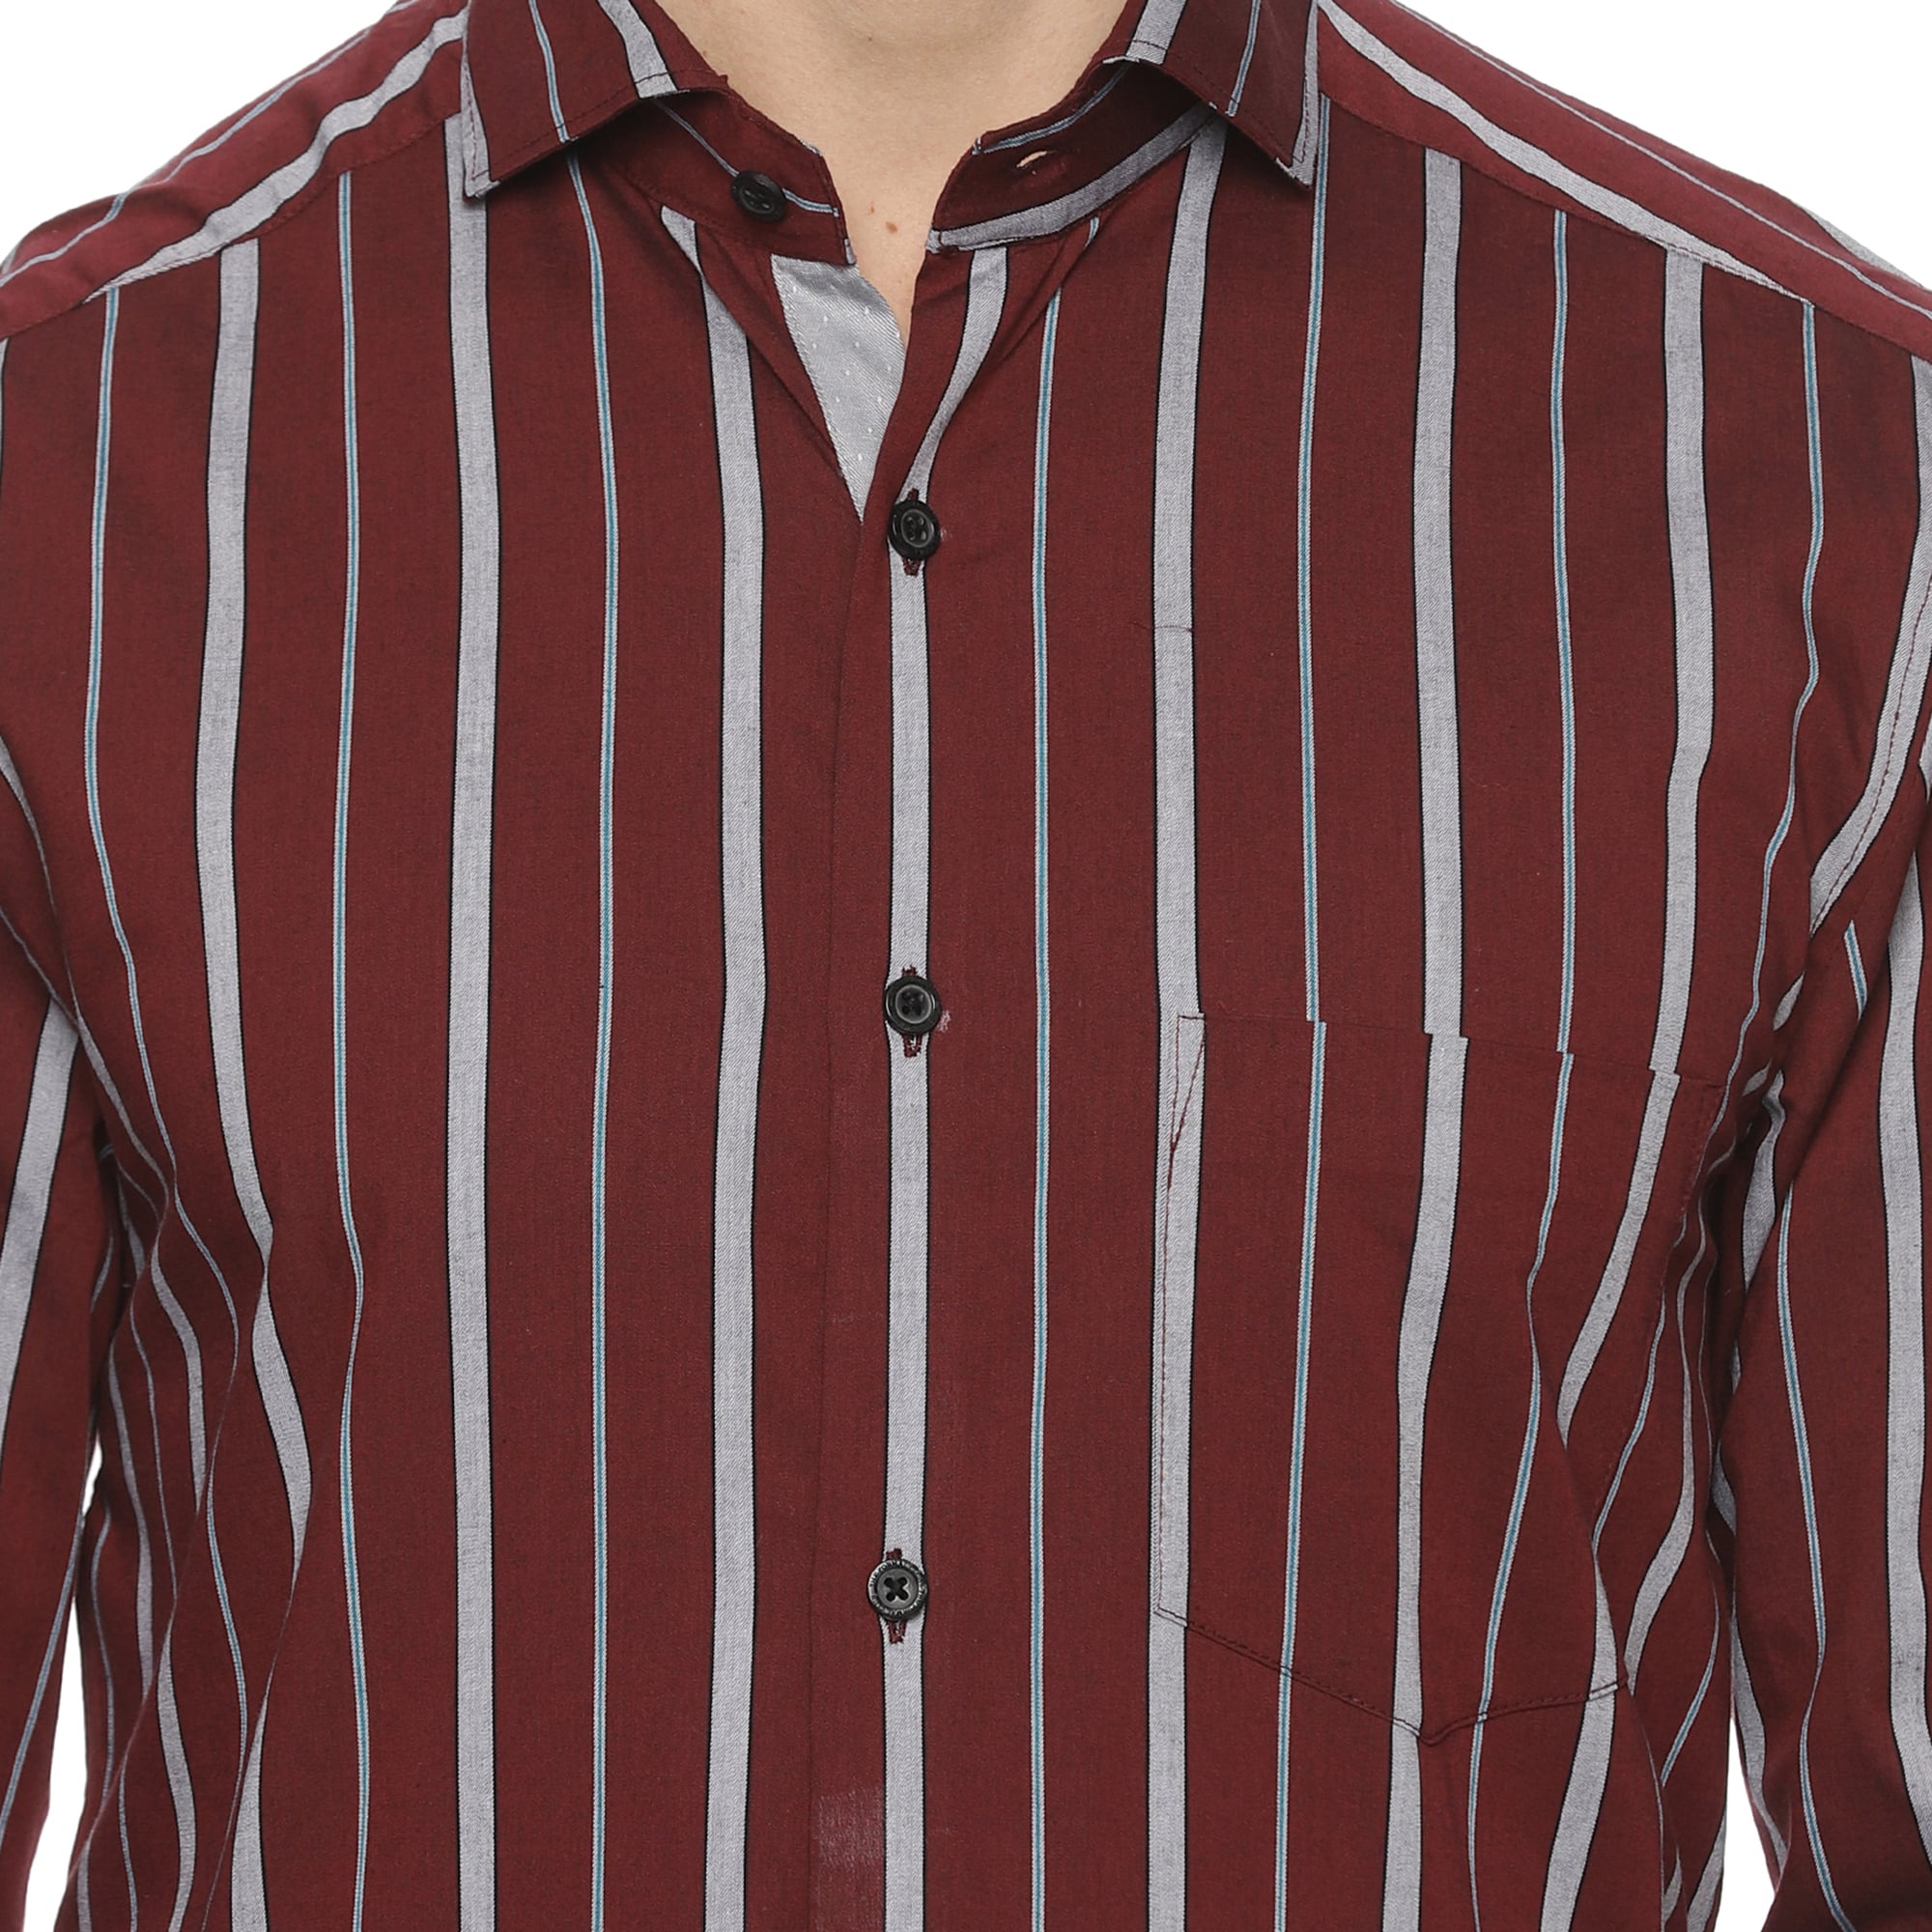 Firebird Stripes Shirt In Maroon - The Formal Club